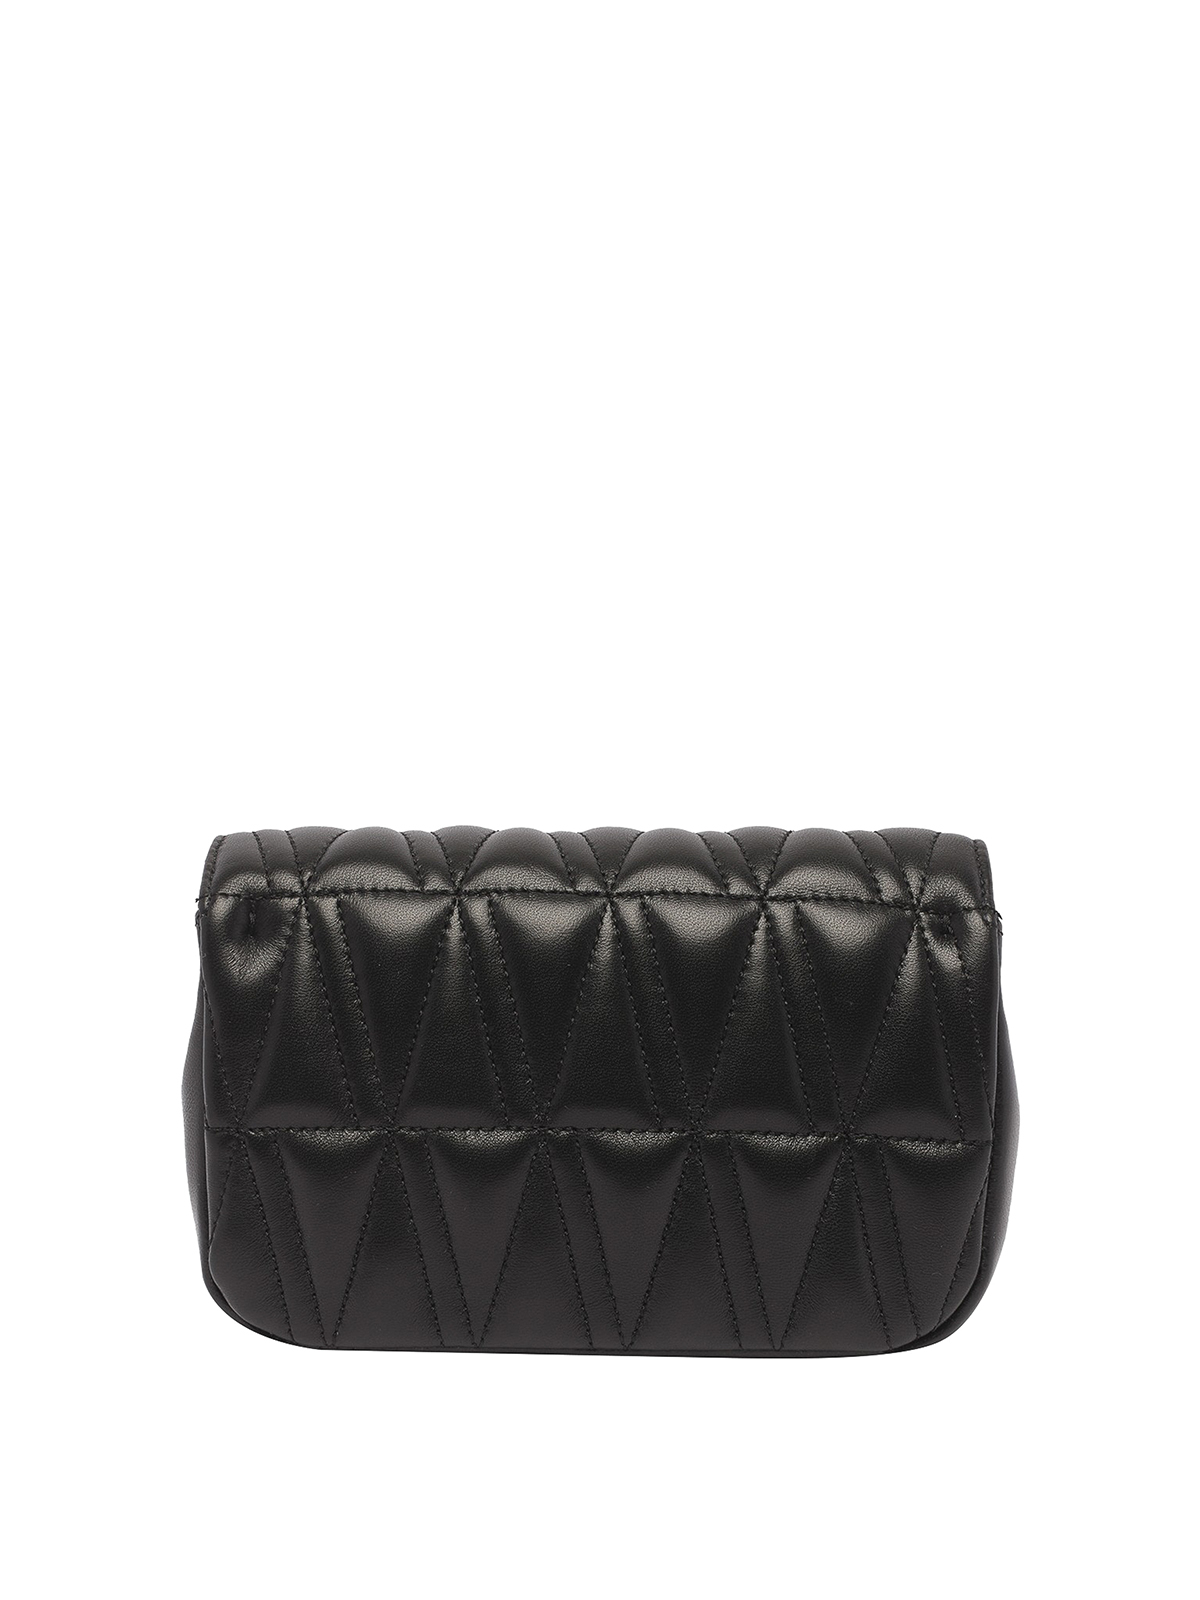 Versace Virtus - Shoulder bag for Woman - Black - DBFI002D2NTRT-DNMOV